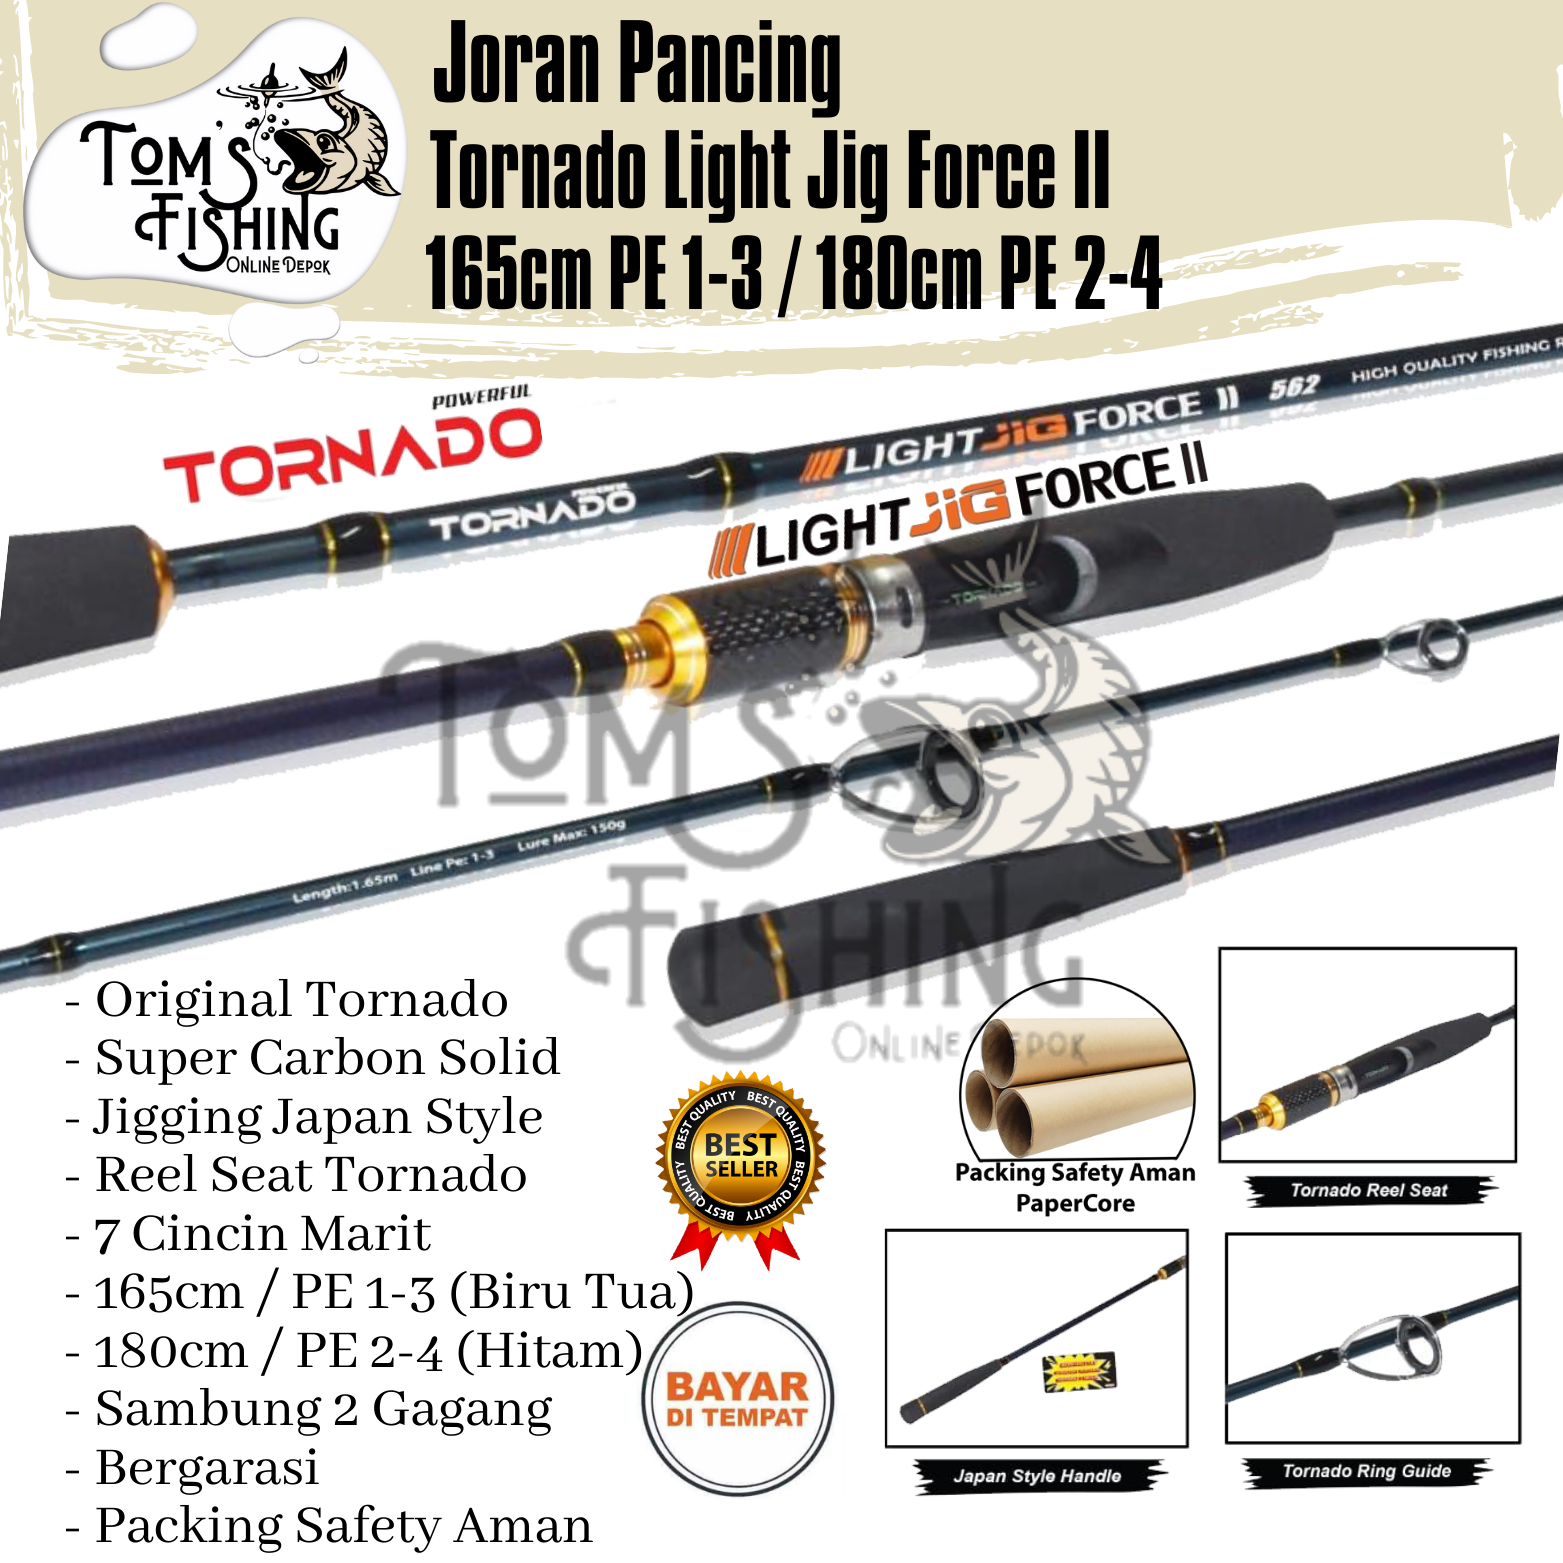 Joran Pancing Jigging Tornado Light Jig Force 2 II 165cm / 180cm